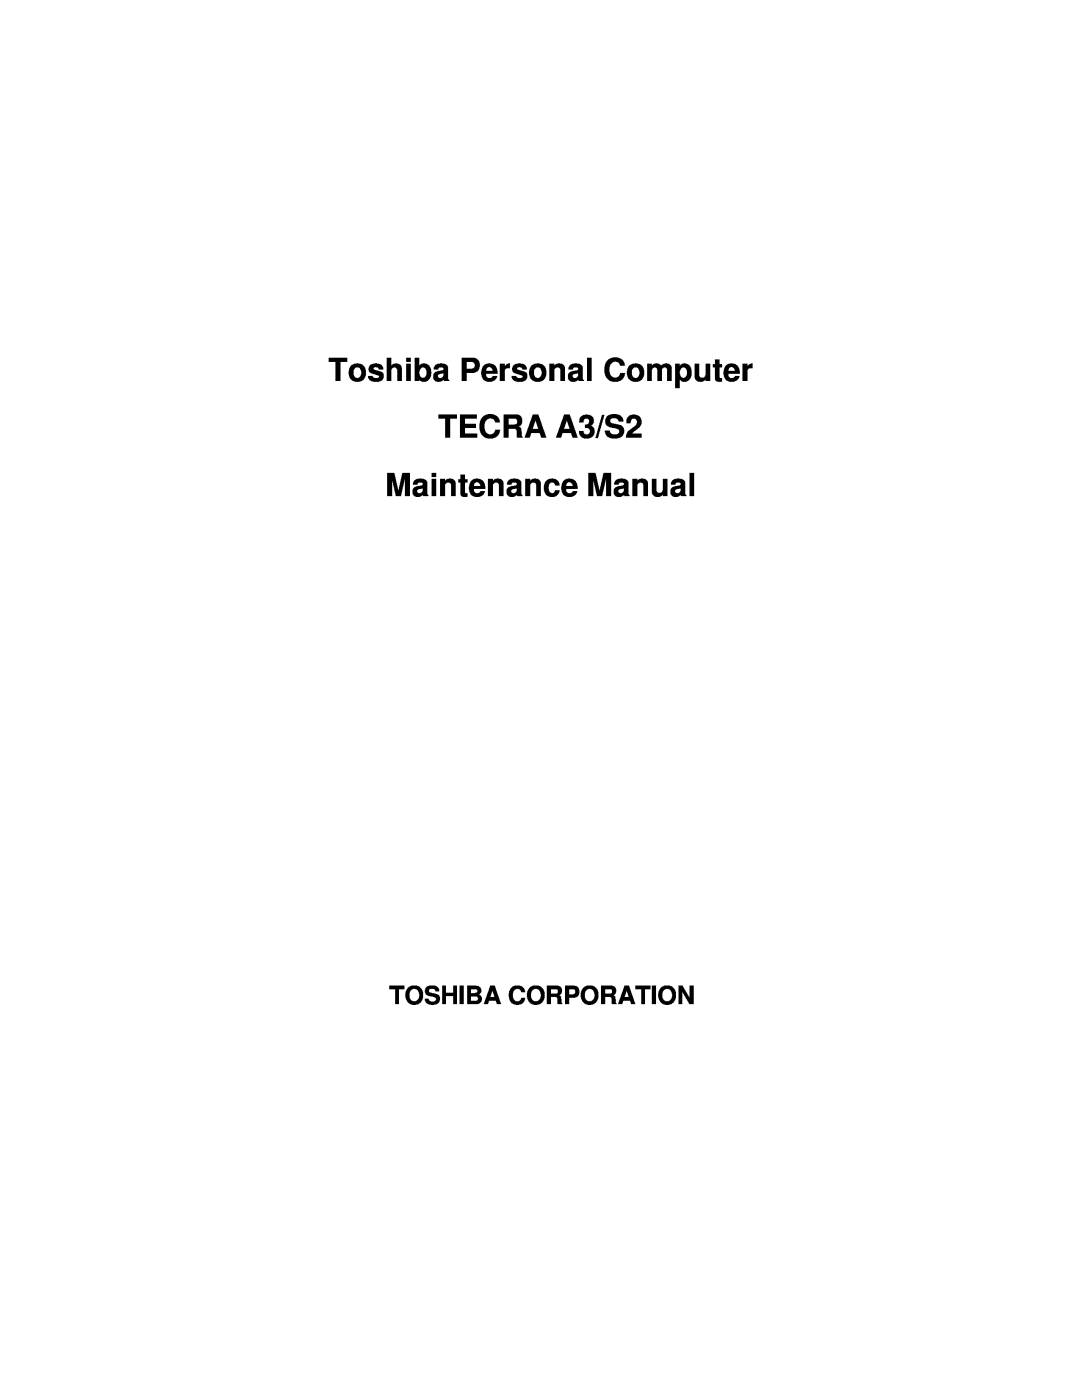 Toshiba manual Toshiba Corporation, Toshiba Personal Computer, TECRA A3/S2 Maintenance Manual 